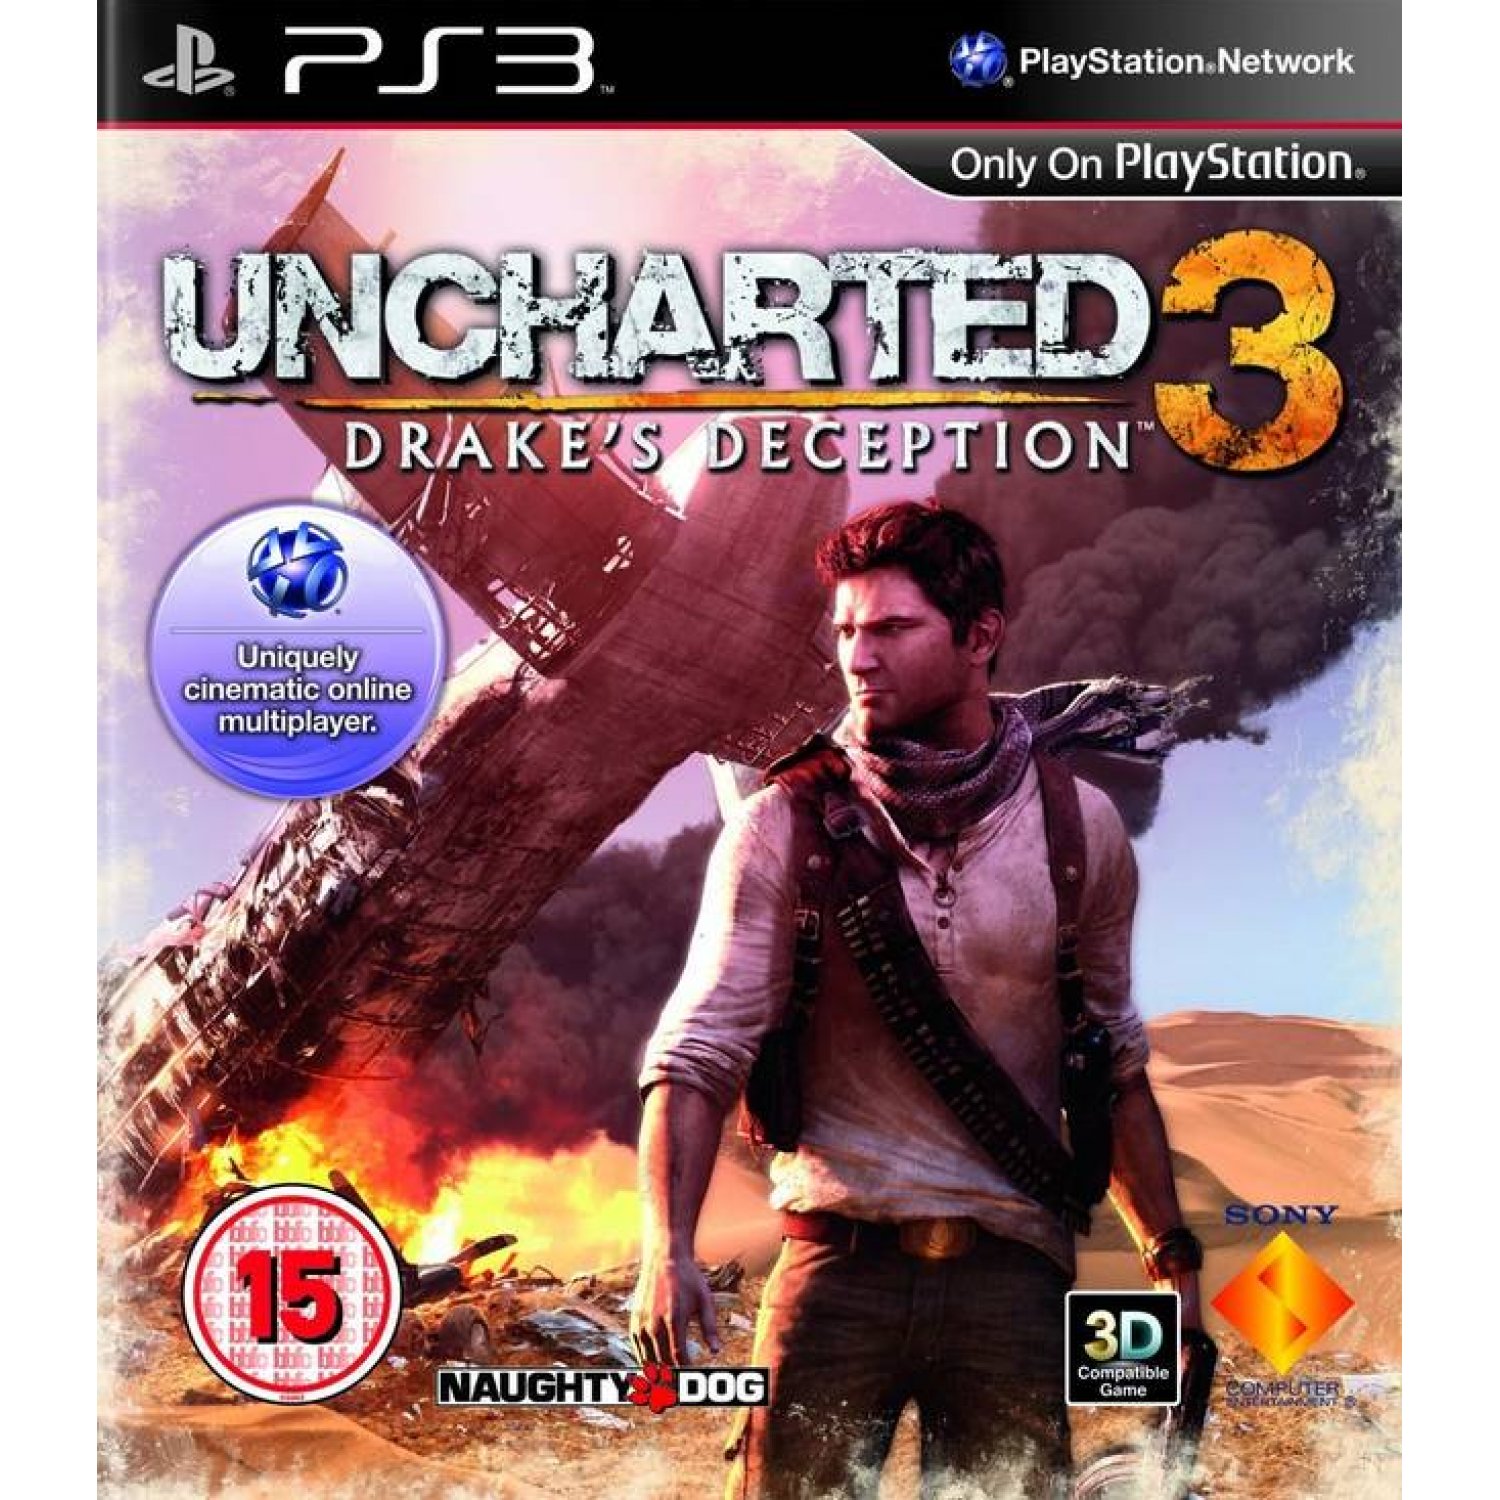 Пс 3 игры диски. Игра ps3 Uncharted 3: Drake’s Deception диск. Uncharted 3 иллюзии Дрейка ps3. Обложка пс3 анчартед. Анчартед 3 диск пс3.